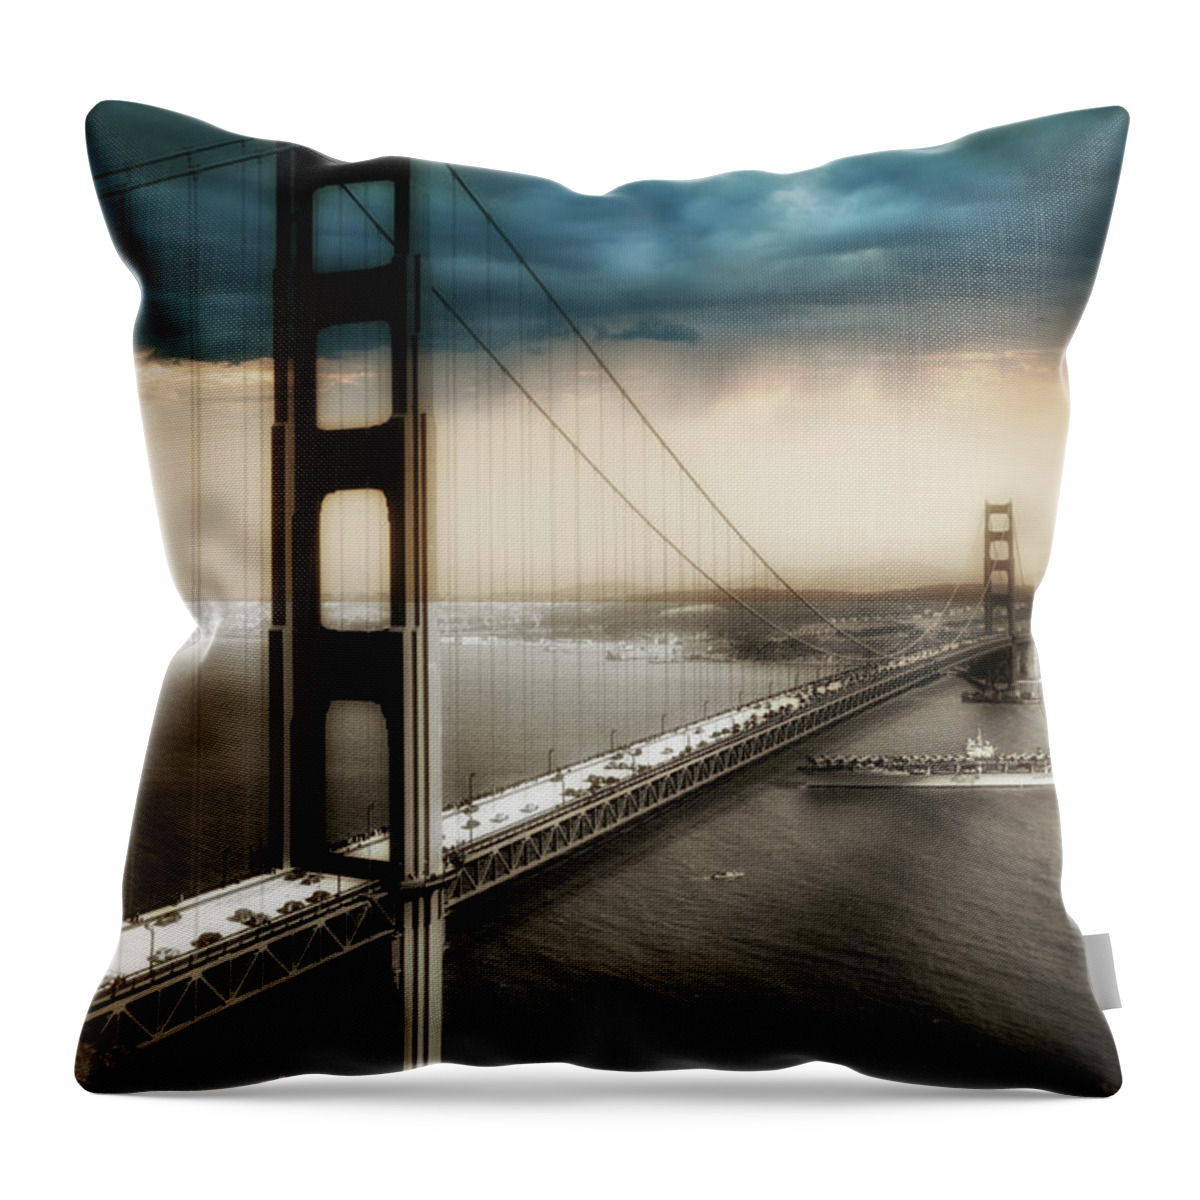 Golden Gate Bridge Throw Pillow featuring the photograph Golden Gate Bridge San Francisco by Mindy Sommers